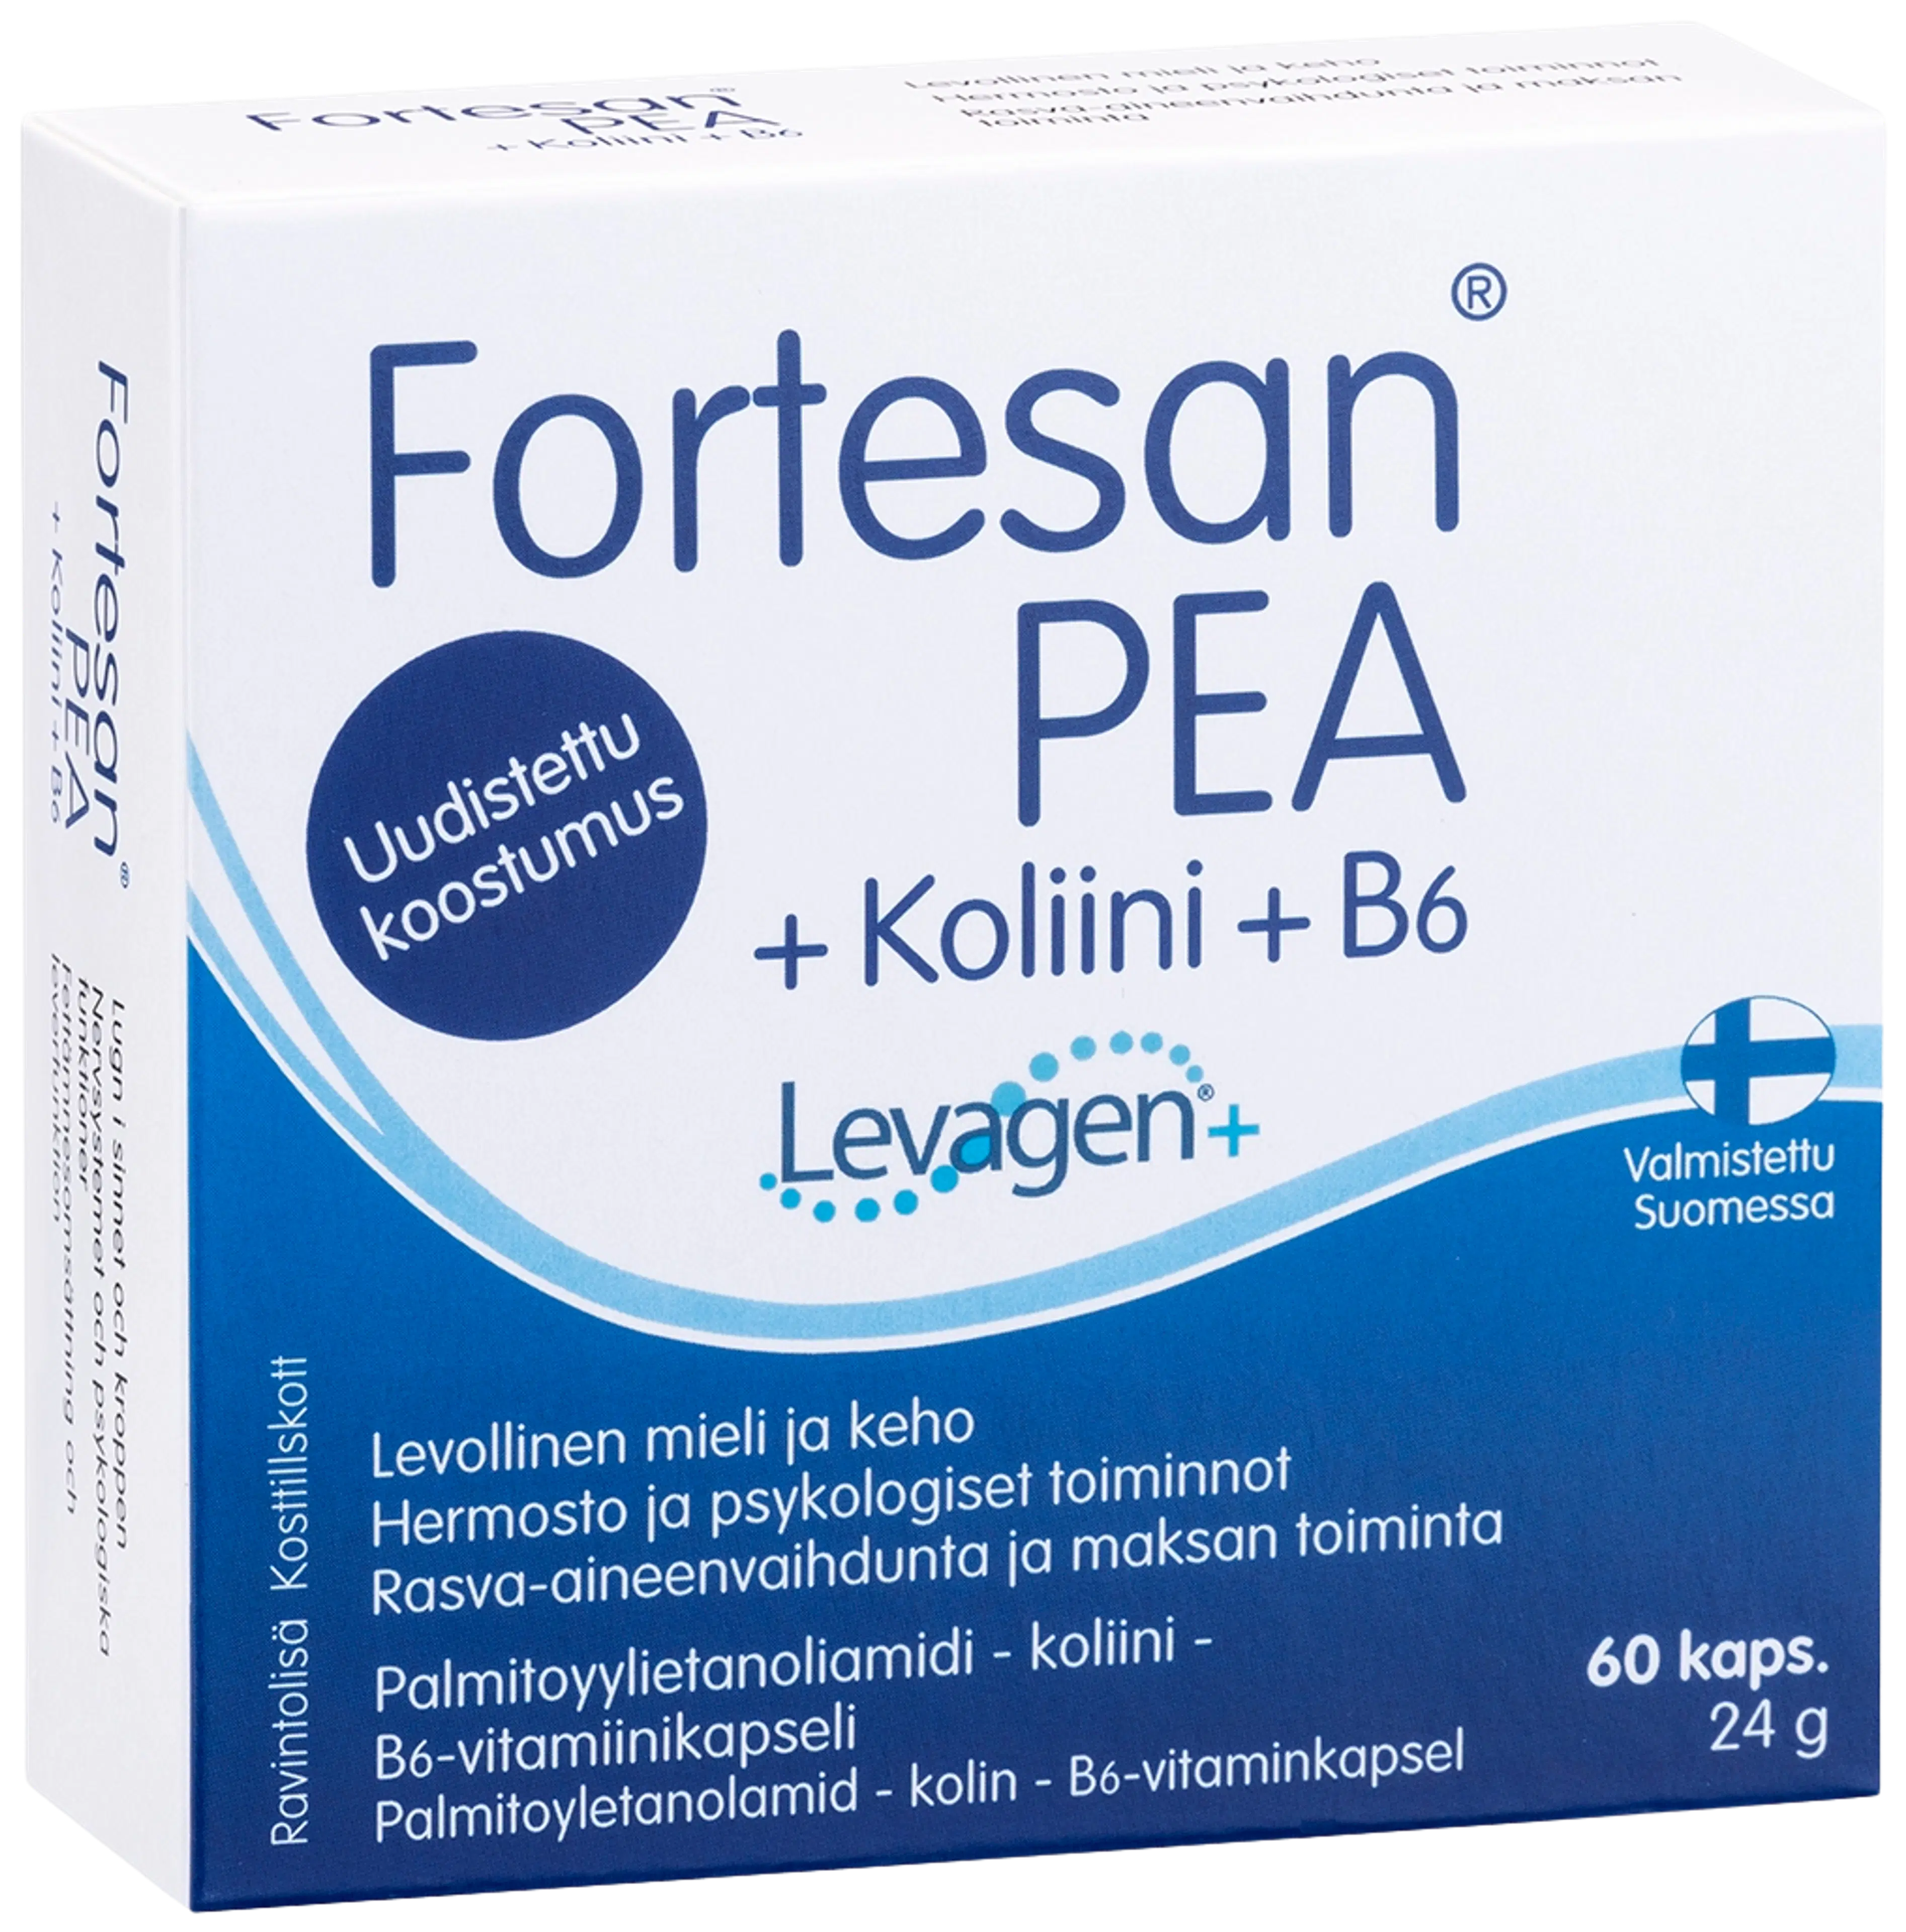 Fortesan PEA + Koliini + B6 Palmitoyylietanoliamidi - koliini - B6-vitamiinikapseli 60 kaps